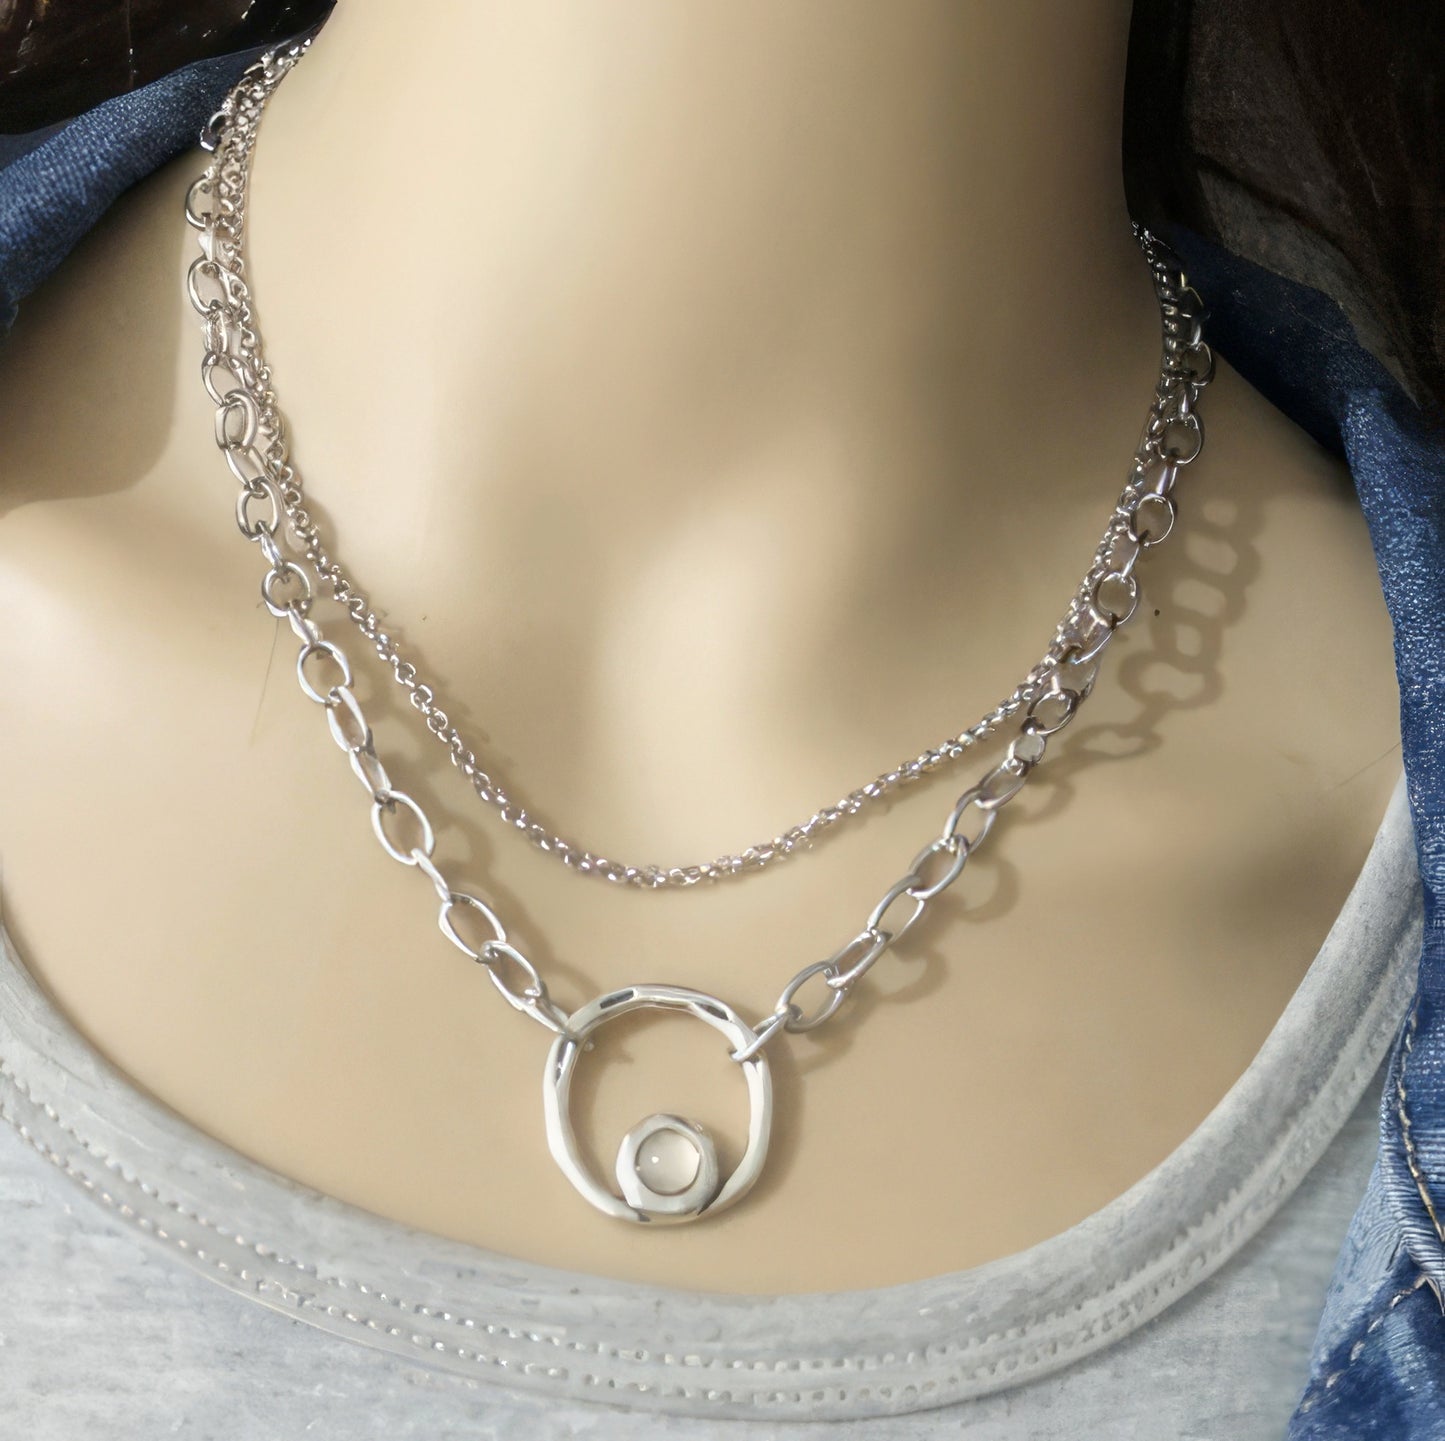 Vintage Retro Round Chain Necklace in White